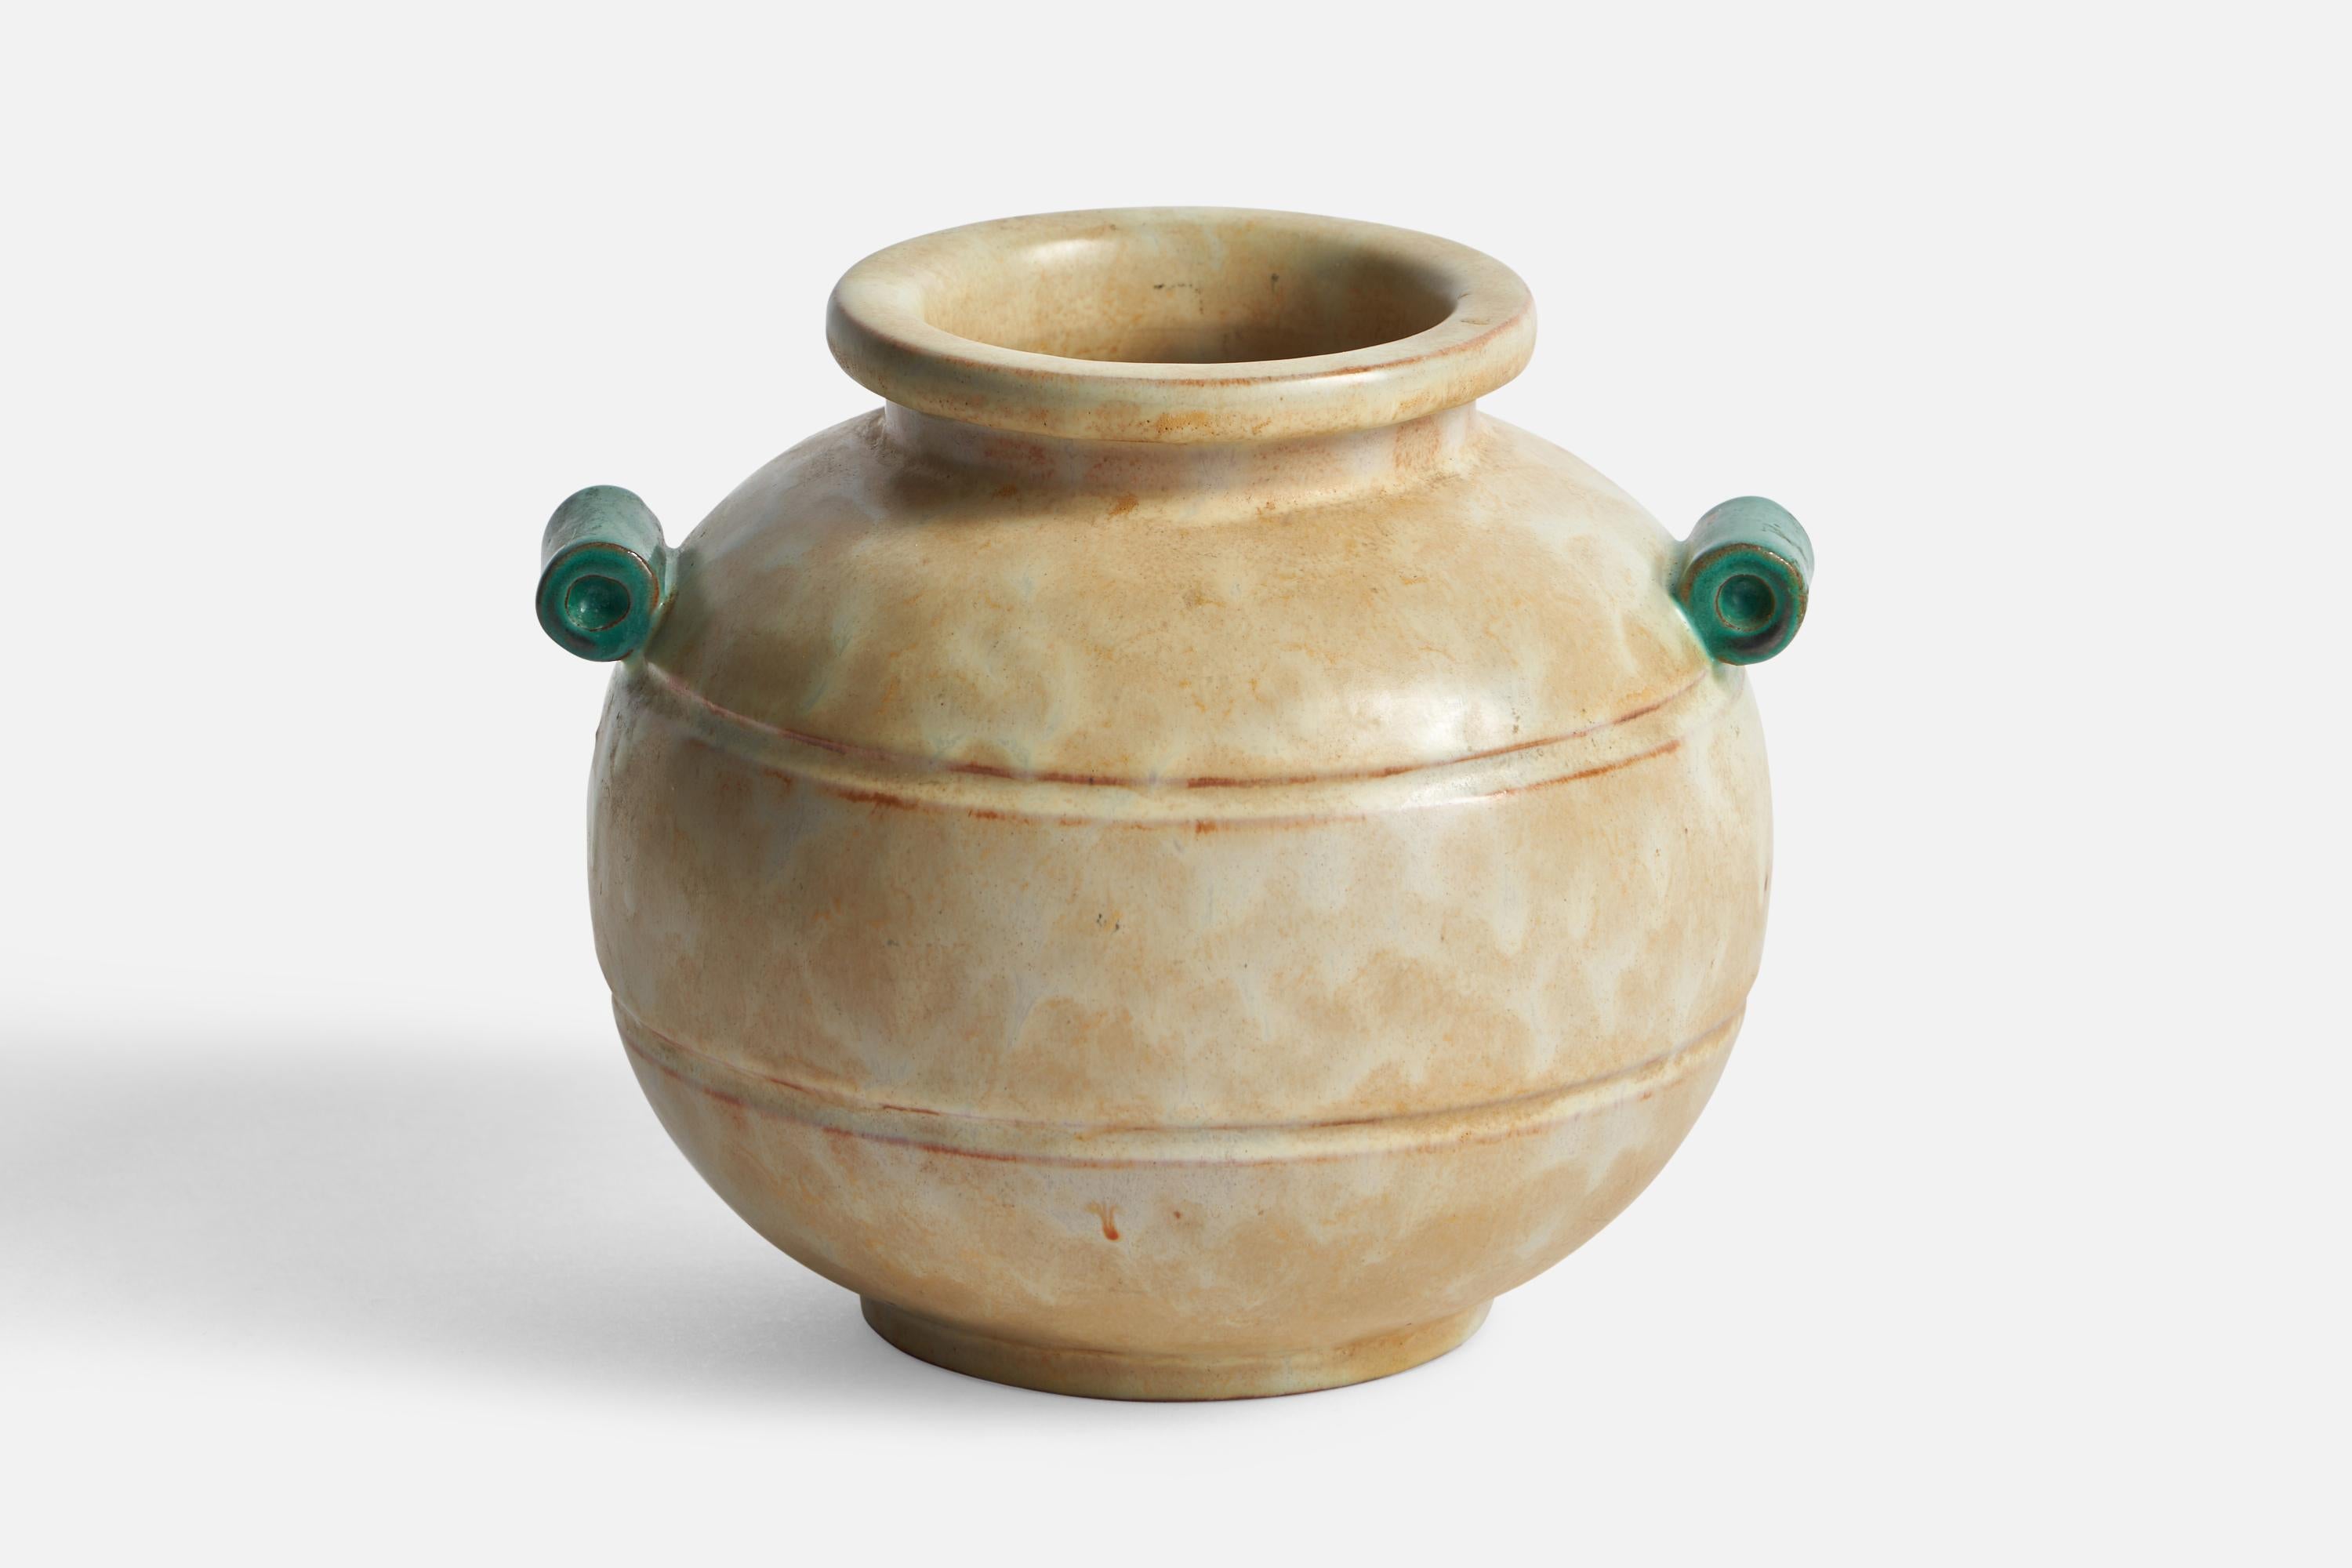 A beige and green-glazed earthenware vase designed and produced by Upsala Ekeby, Sweden, 1930s.